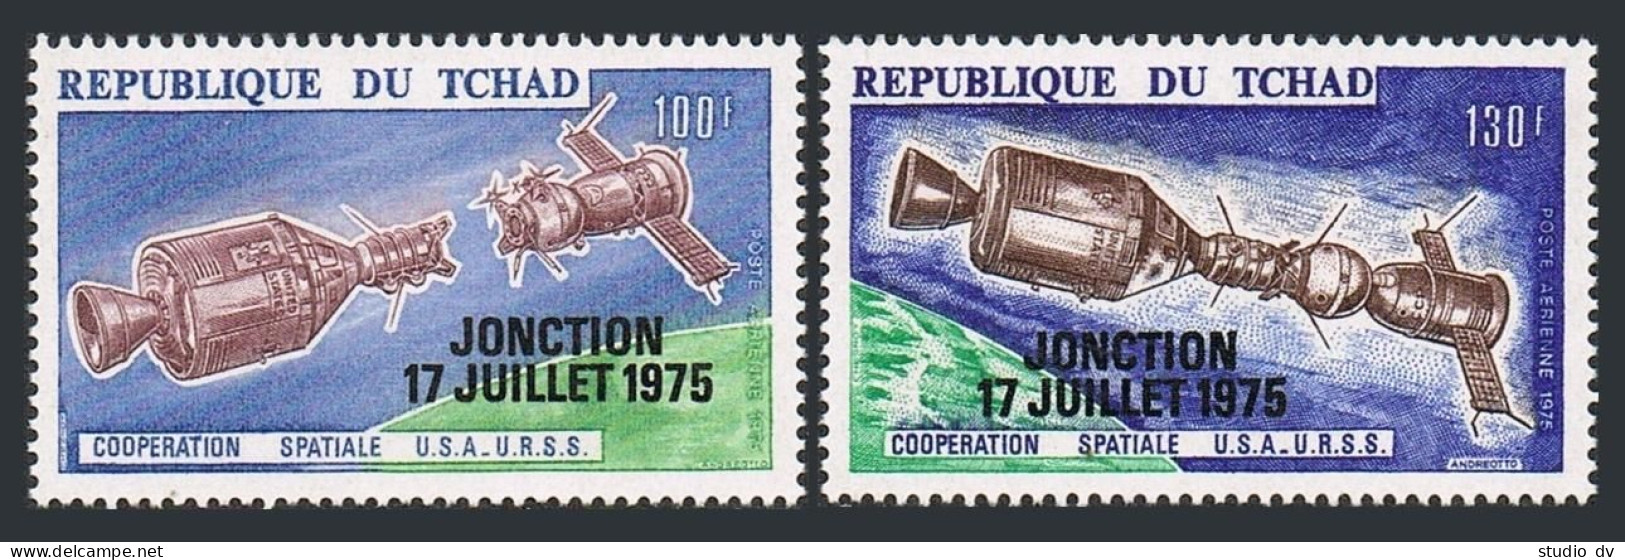 Chad C171-C172, MNH. Michel 722-723. Apollo-Soyuz. JONCTION 17 JULET 1975. - Tchad (1960-...)